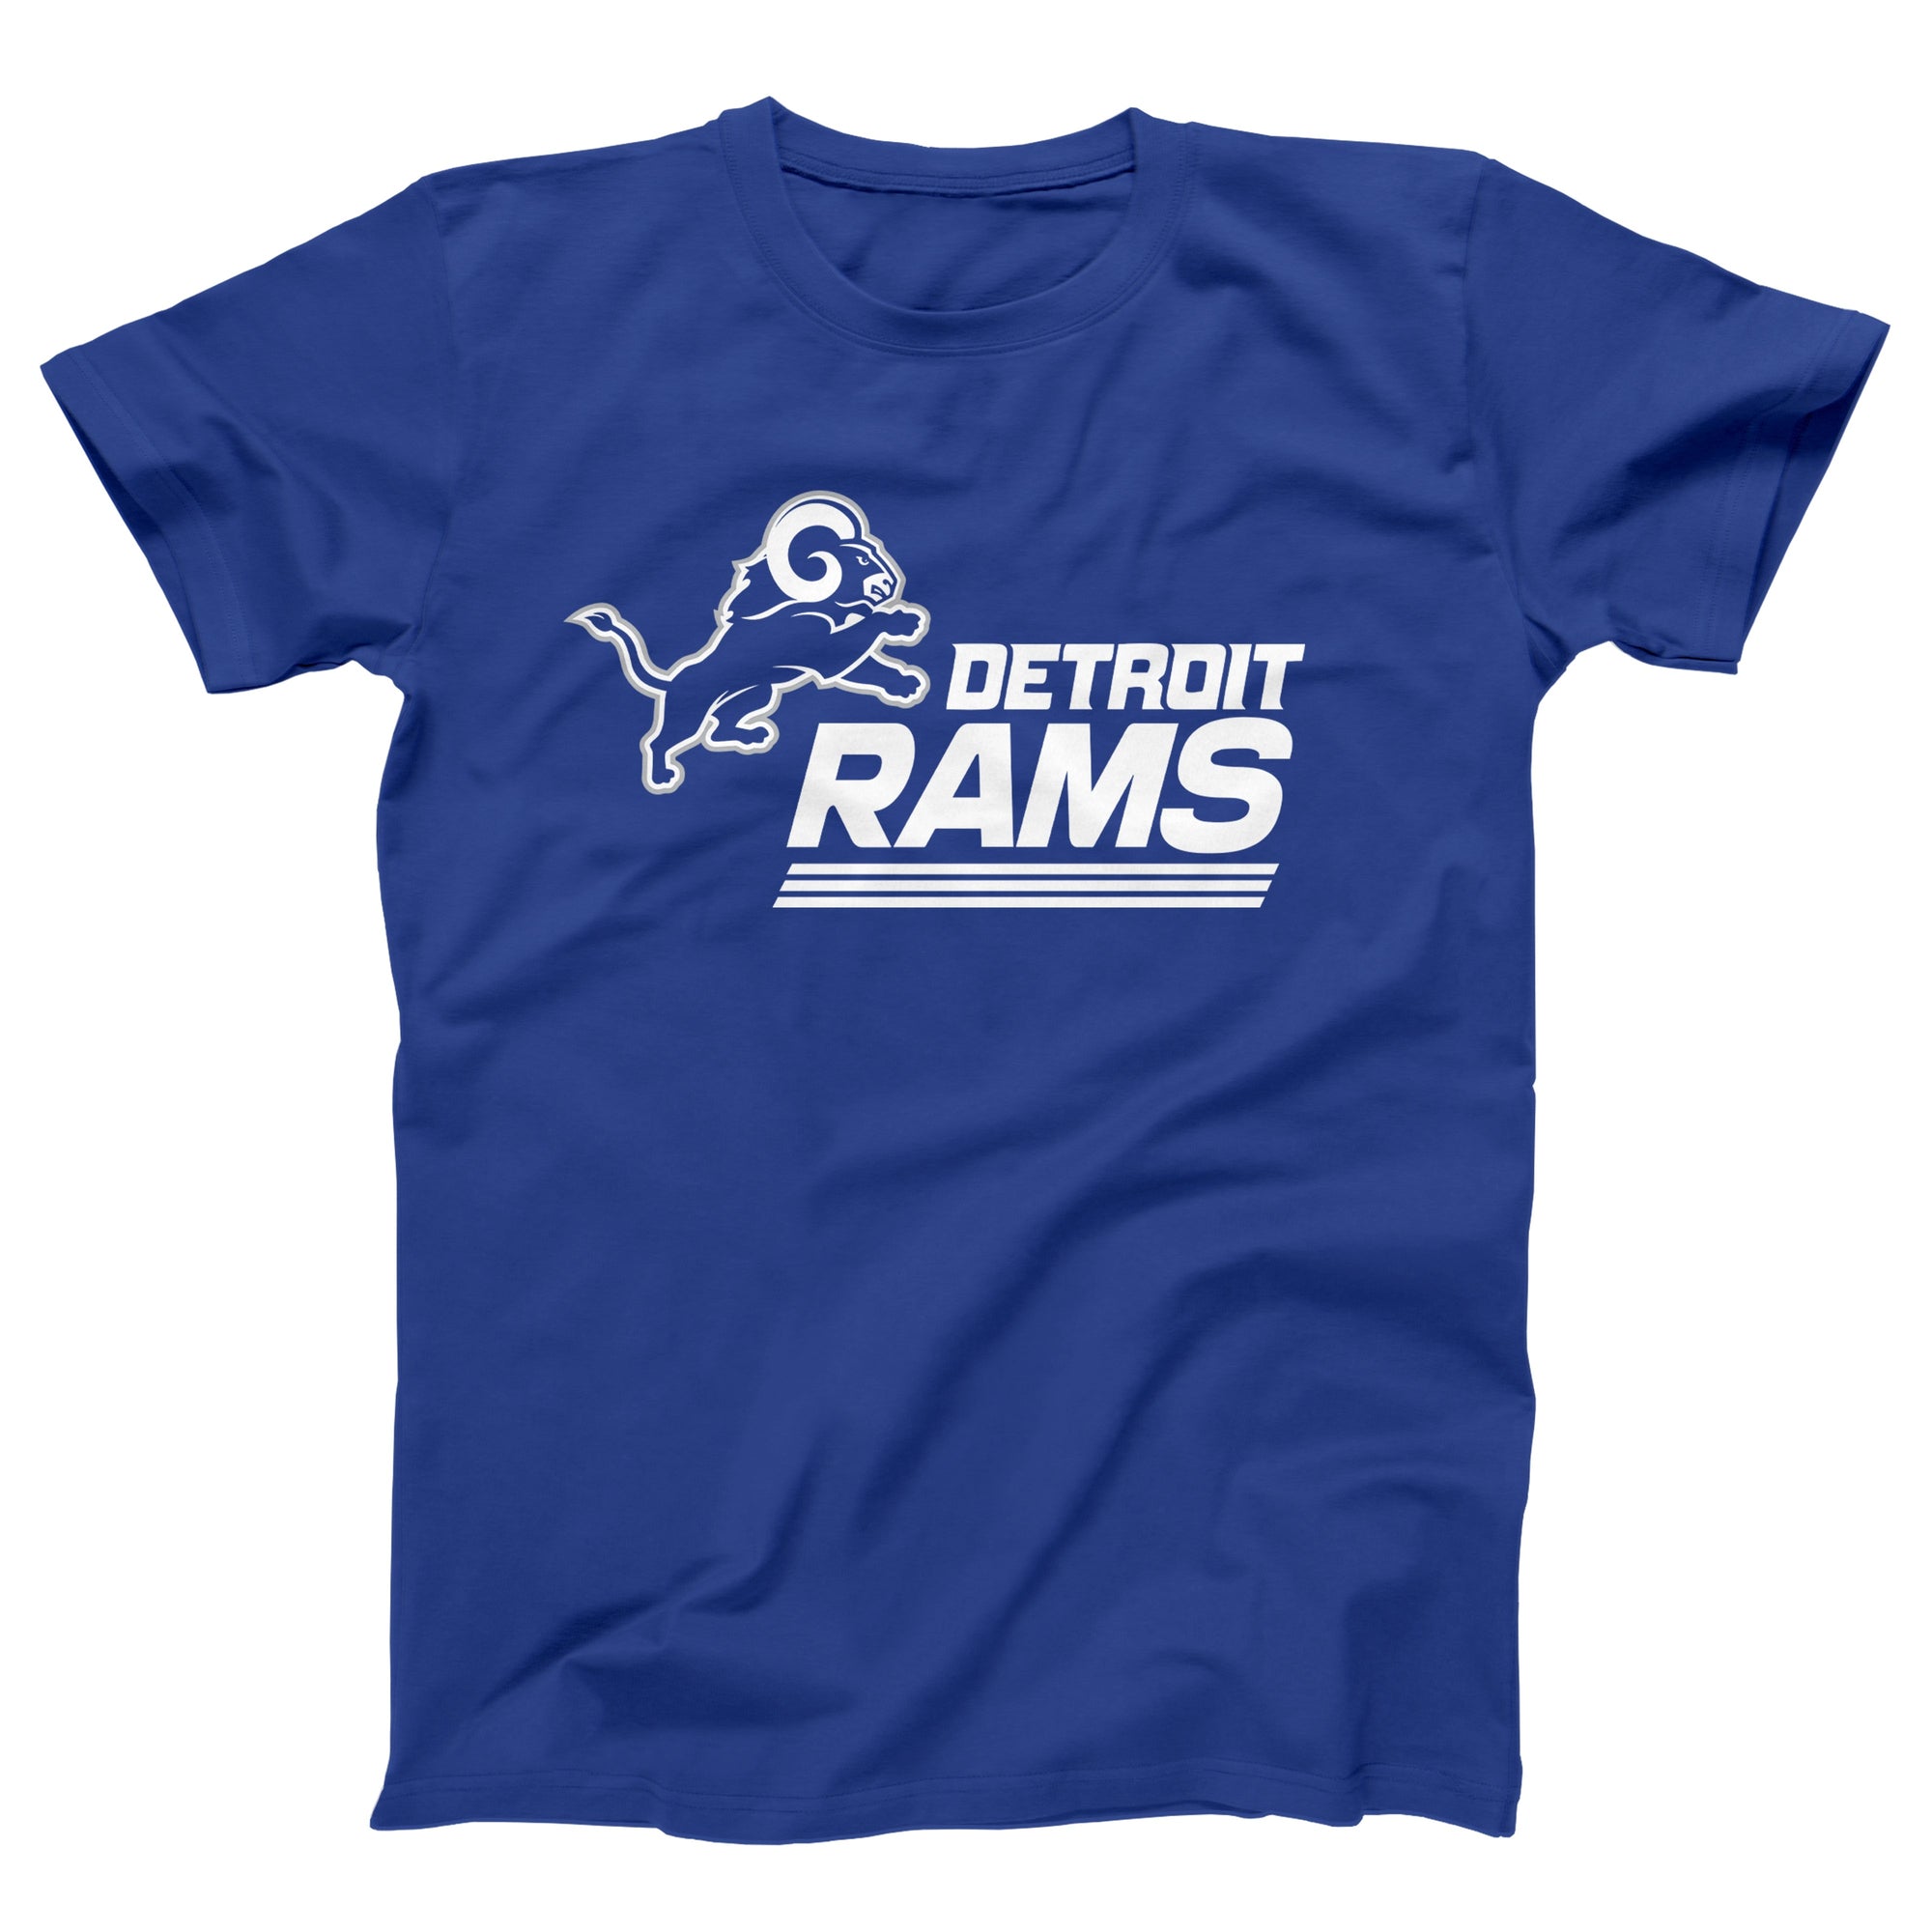 Detroit Rams Adult Unisex T-Shirt - anishphilip